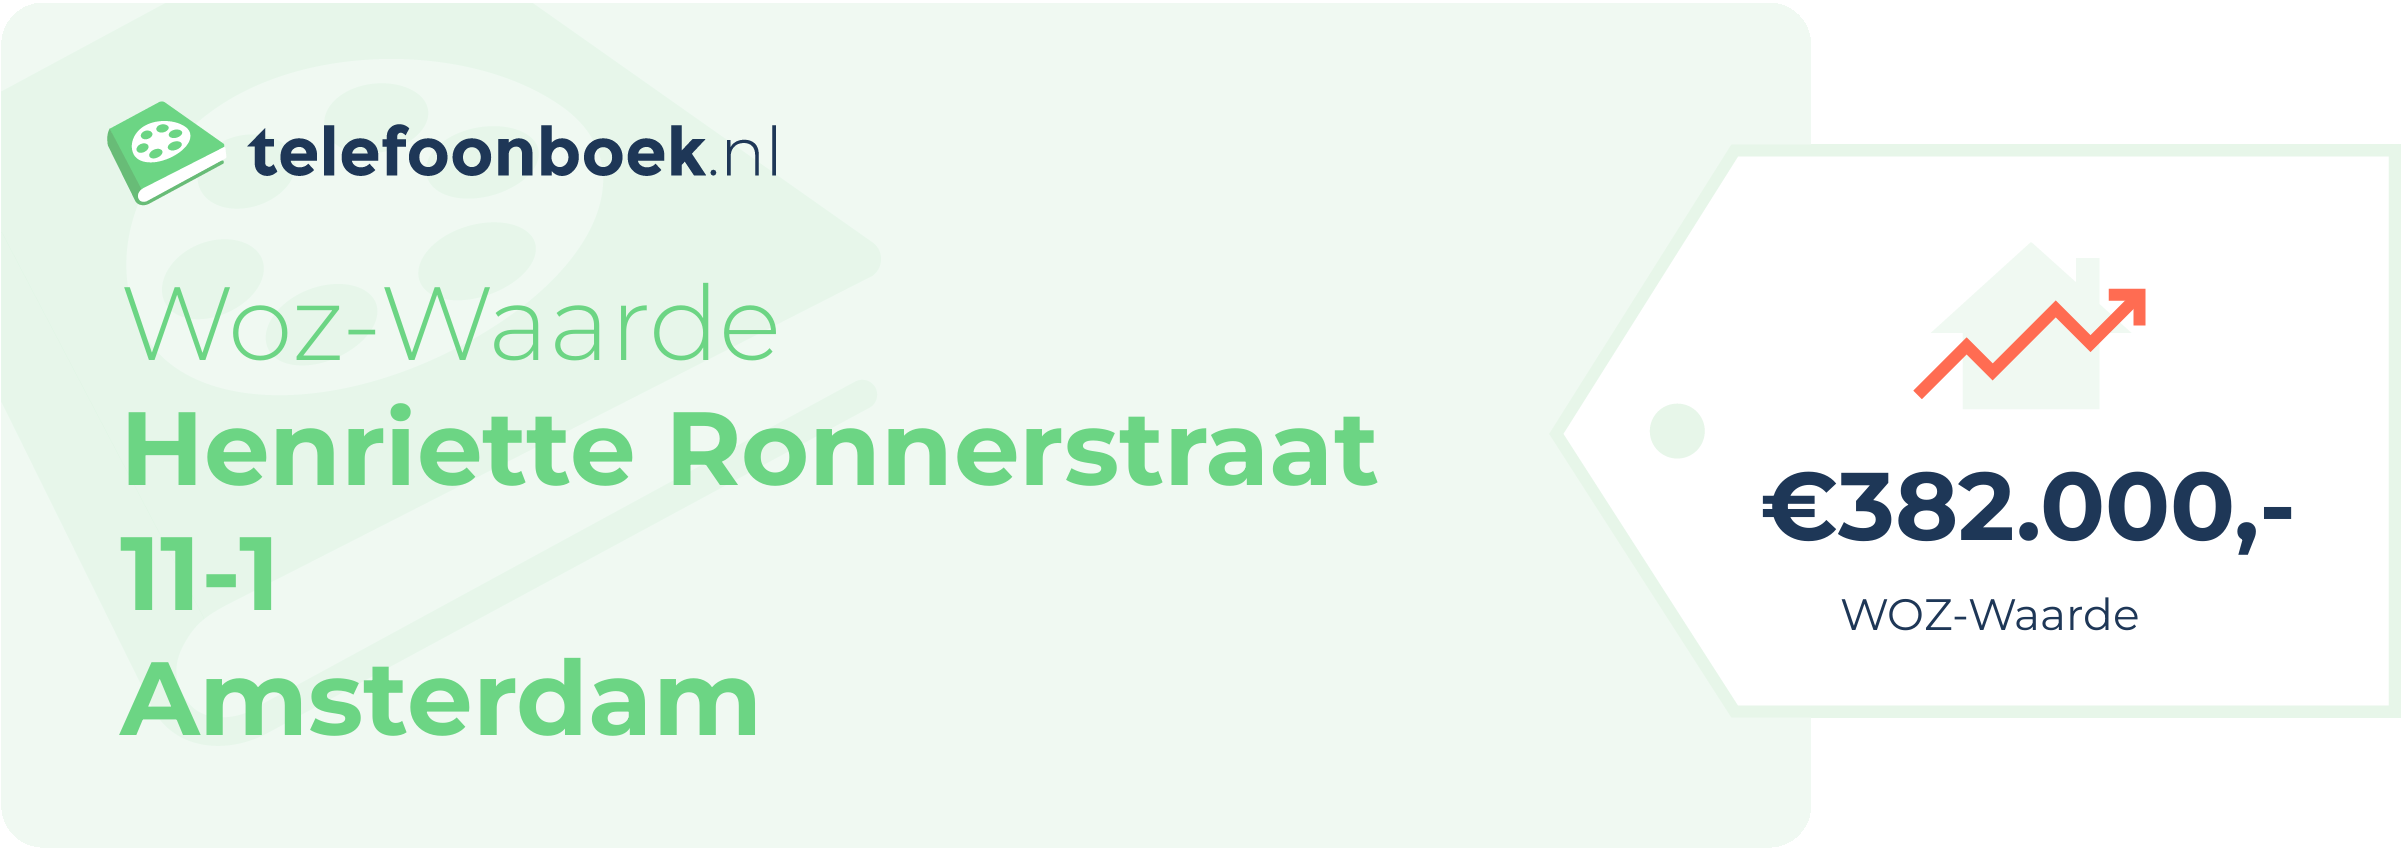 WOZ-waarde Henriette Ronnerstraat 11-1 Amsterdam